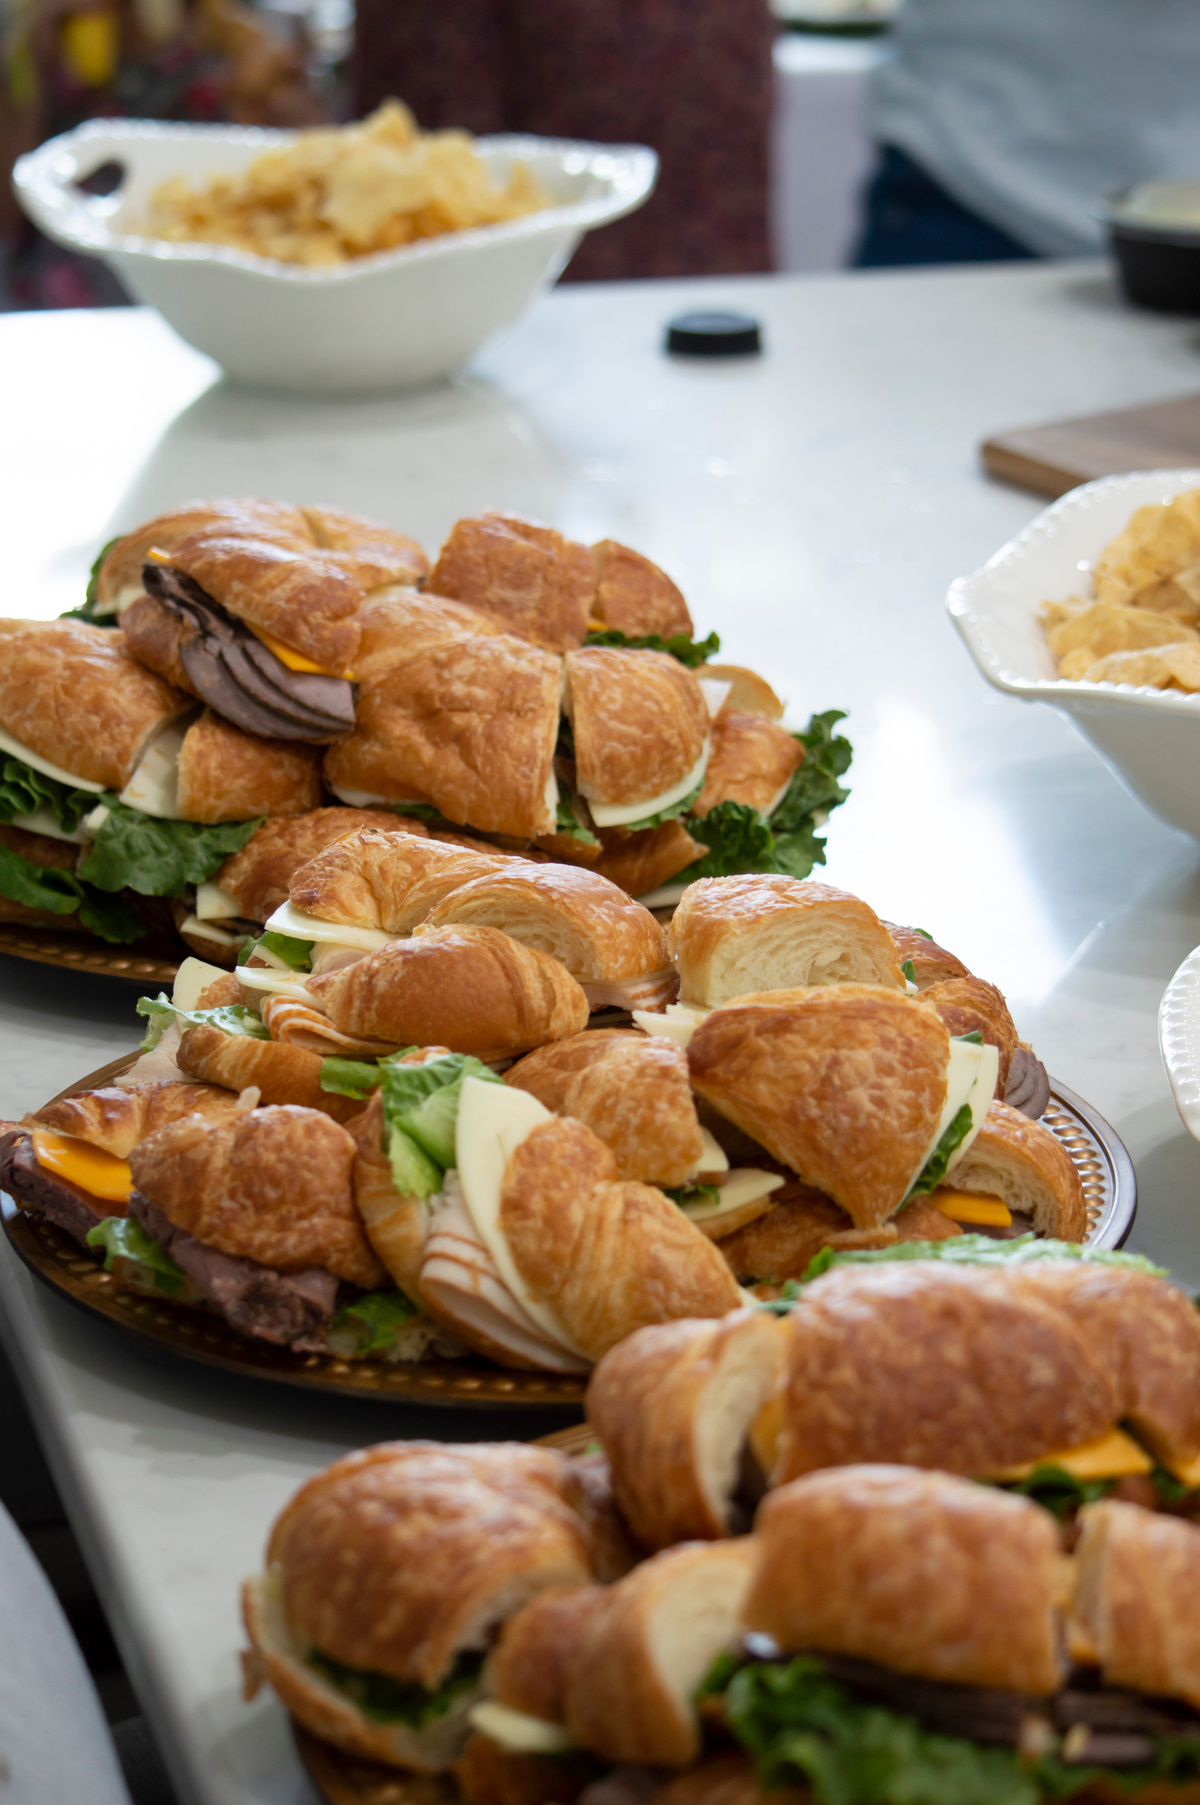 A platter of assorted sandwiches